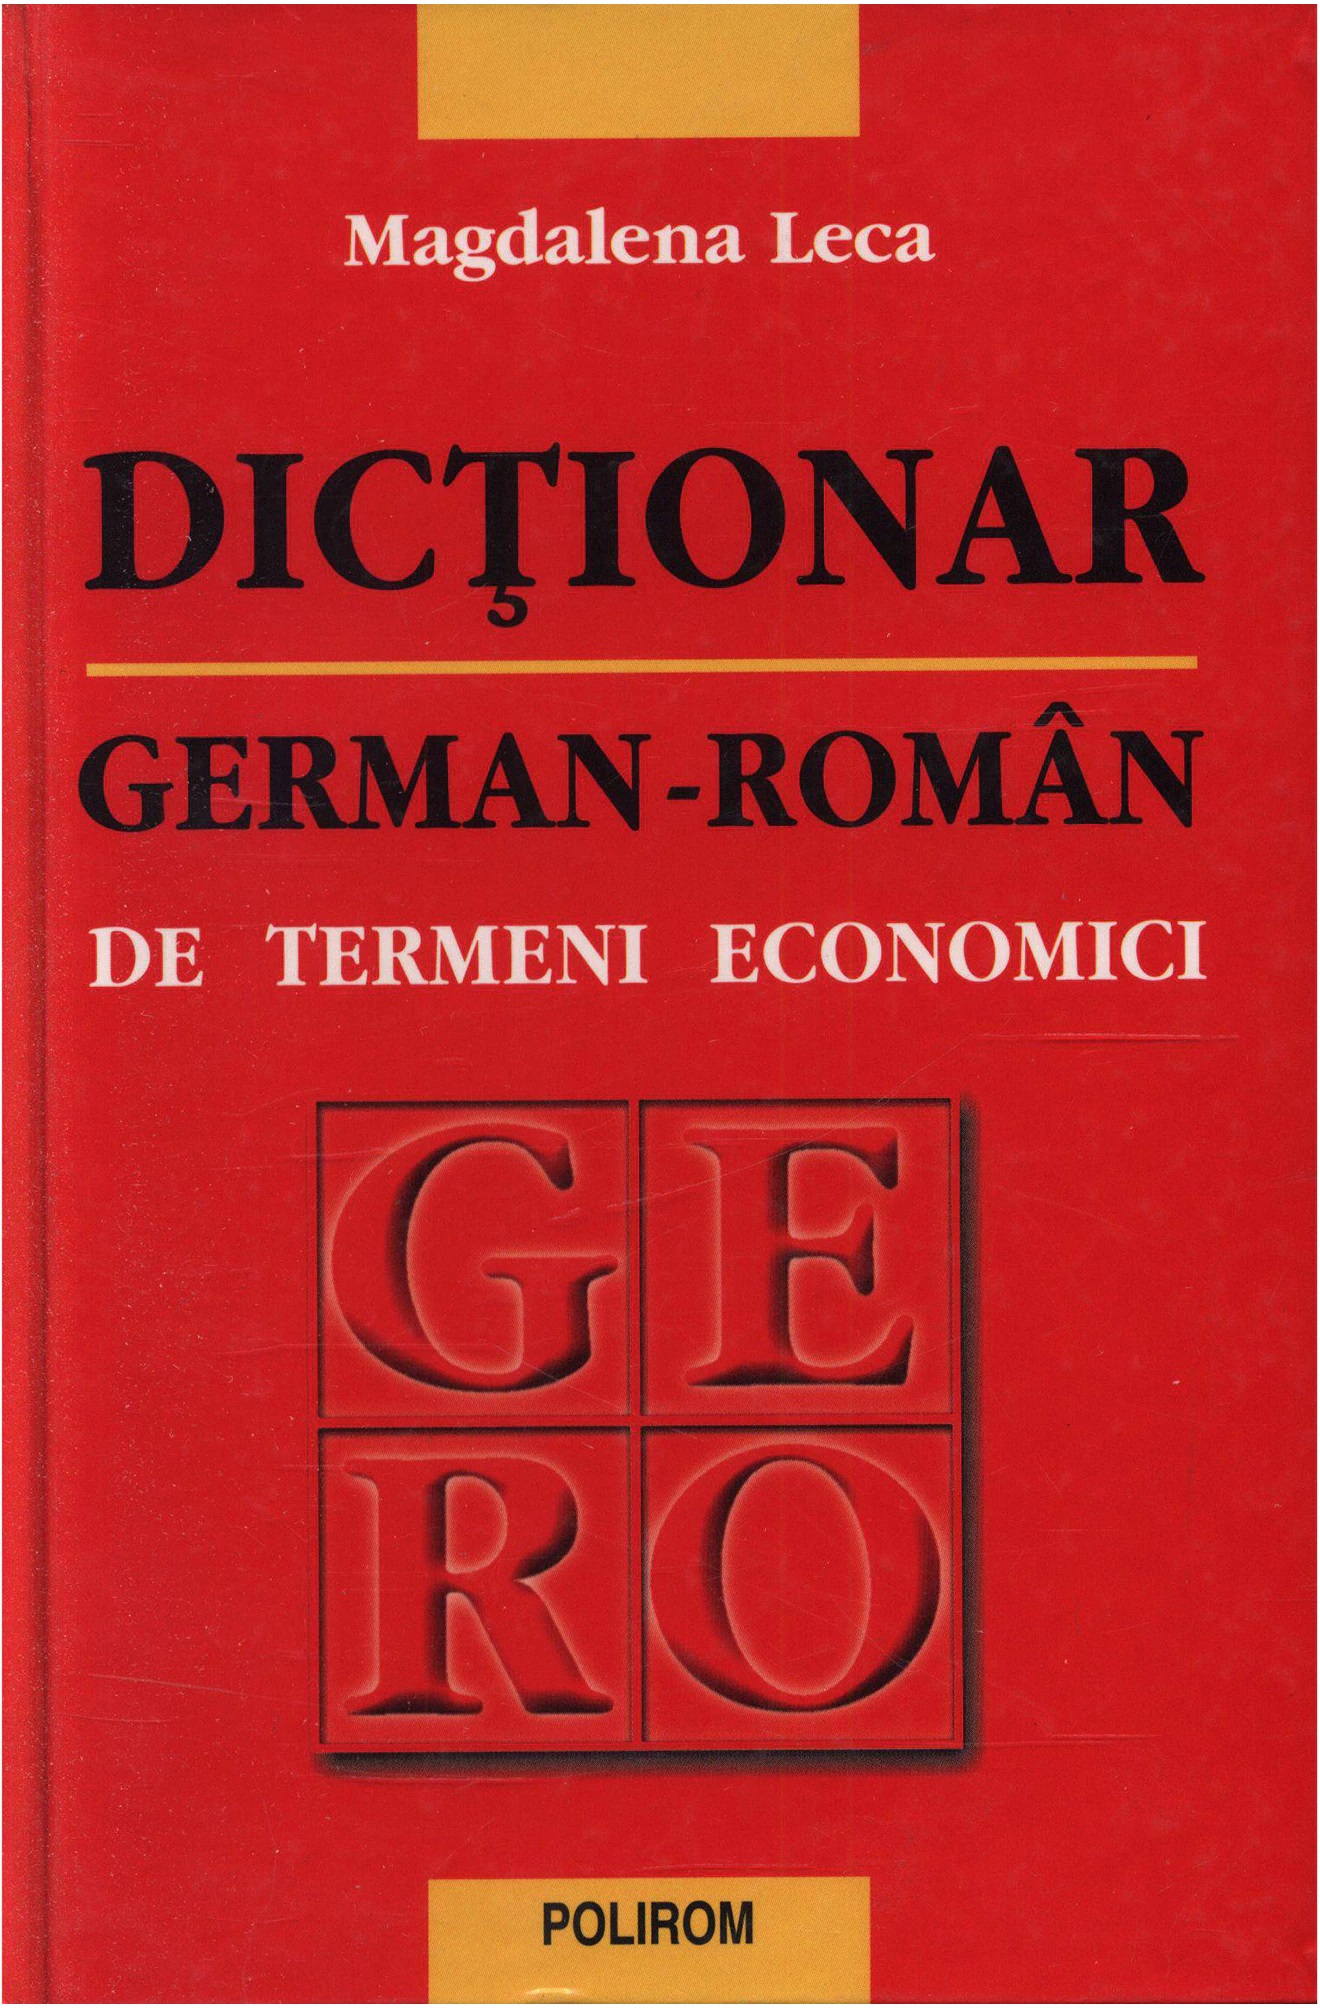 Dictionar economic german-roman | Magdalena Leca carte